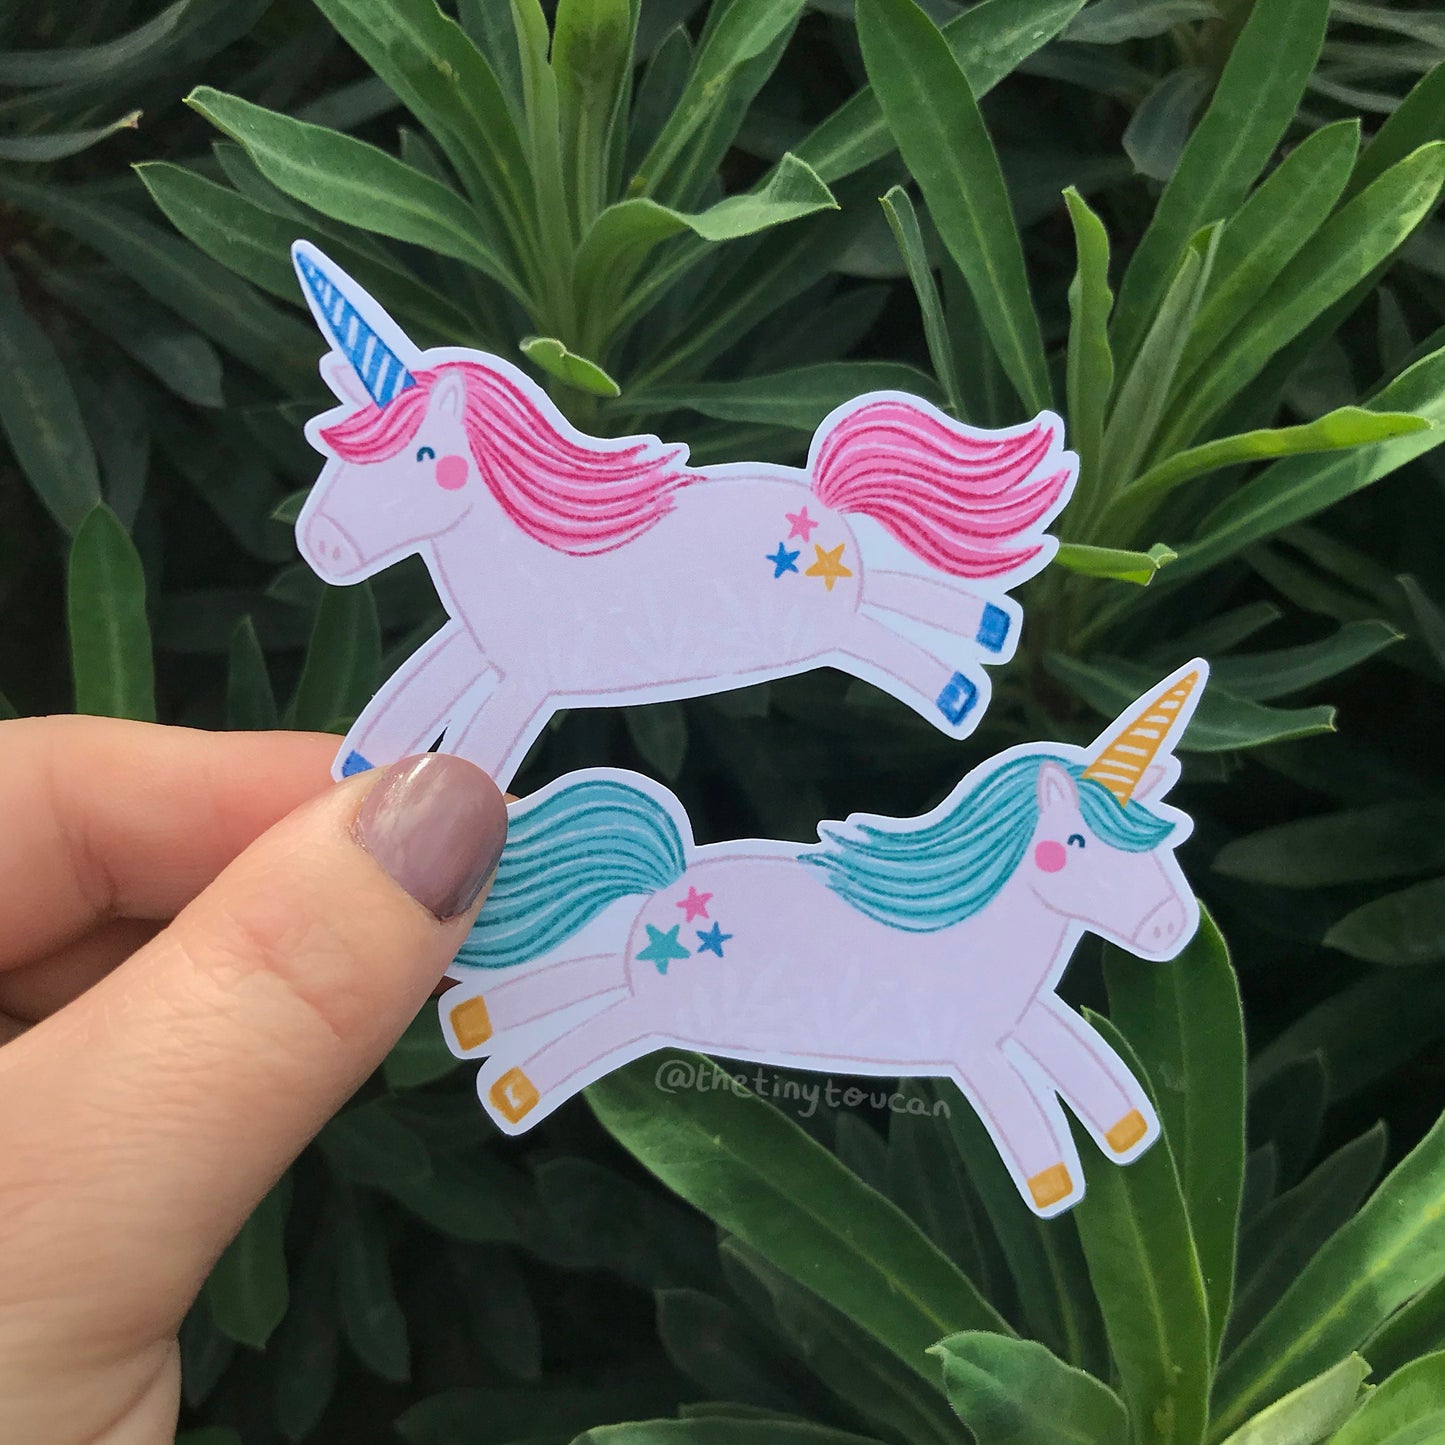 Magical Friends Sticker Pack!  (Unicorn, Princess, Frog, Flowers, Dragon, Swan sticker pack, tech stickers, laptop sticker, cute)